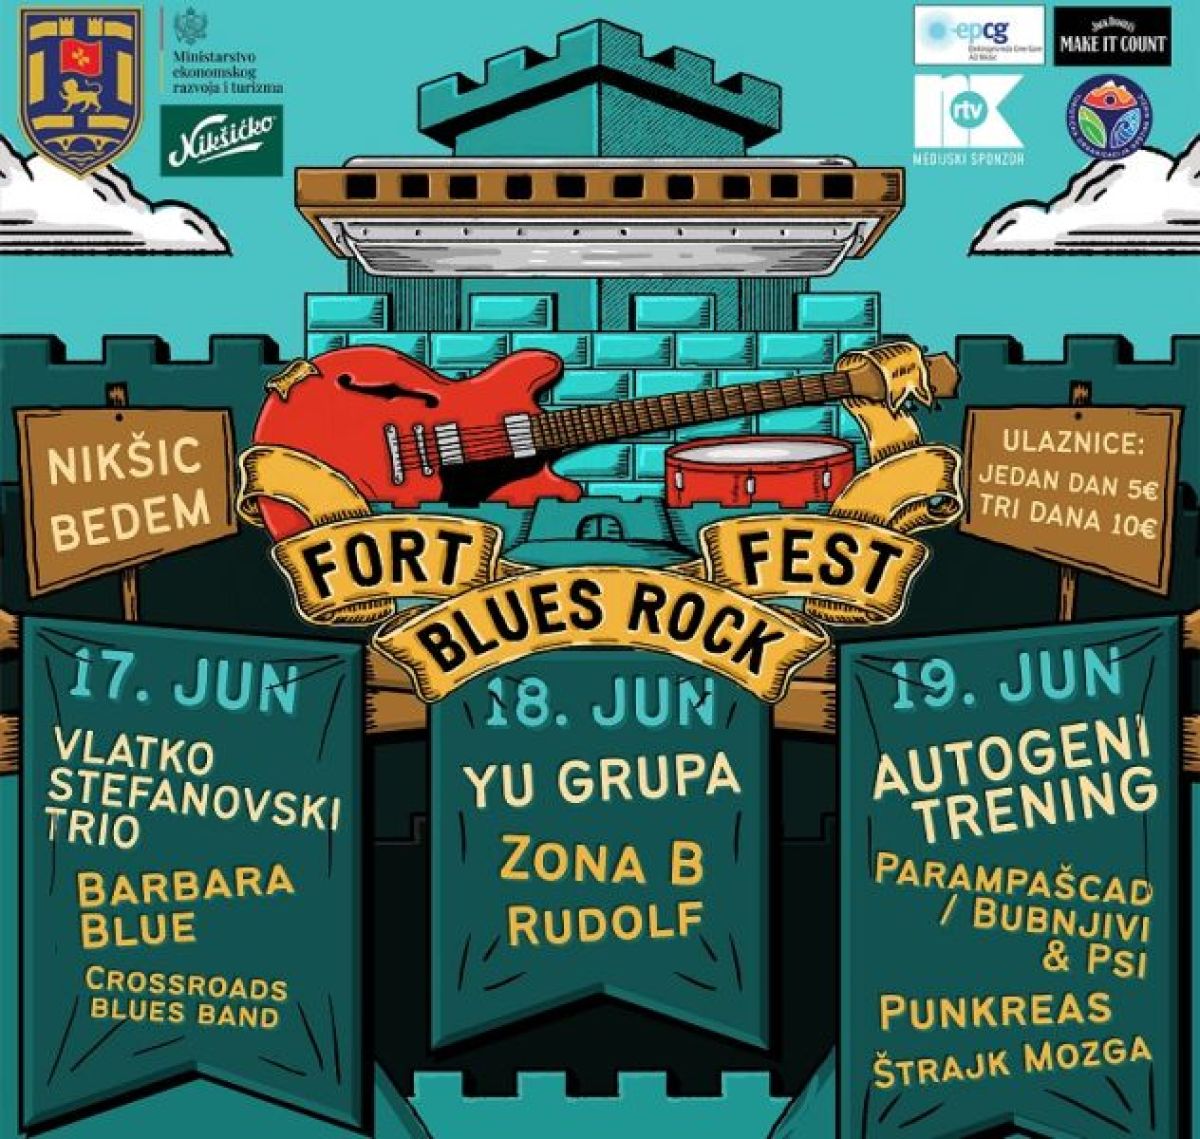 Novi festival u Nikšiću: Fort blues rock fest od 17. do 19. juna na Bedemu